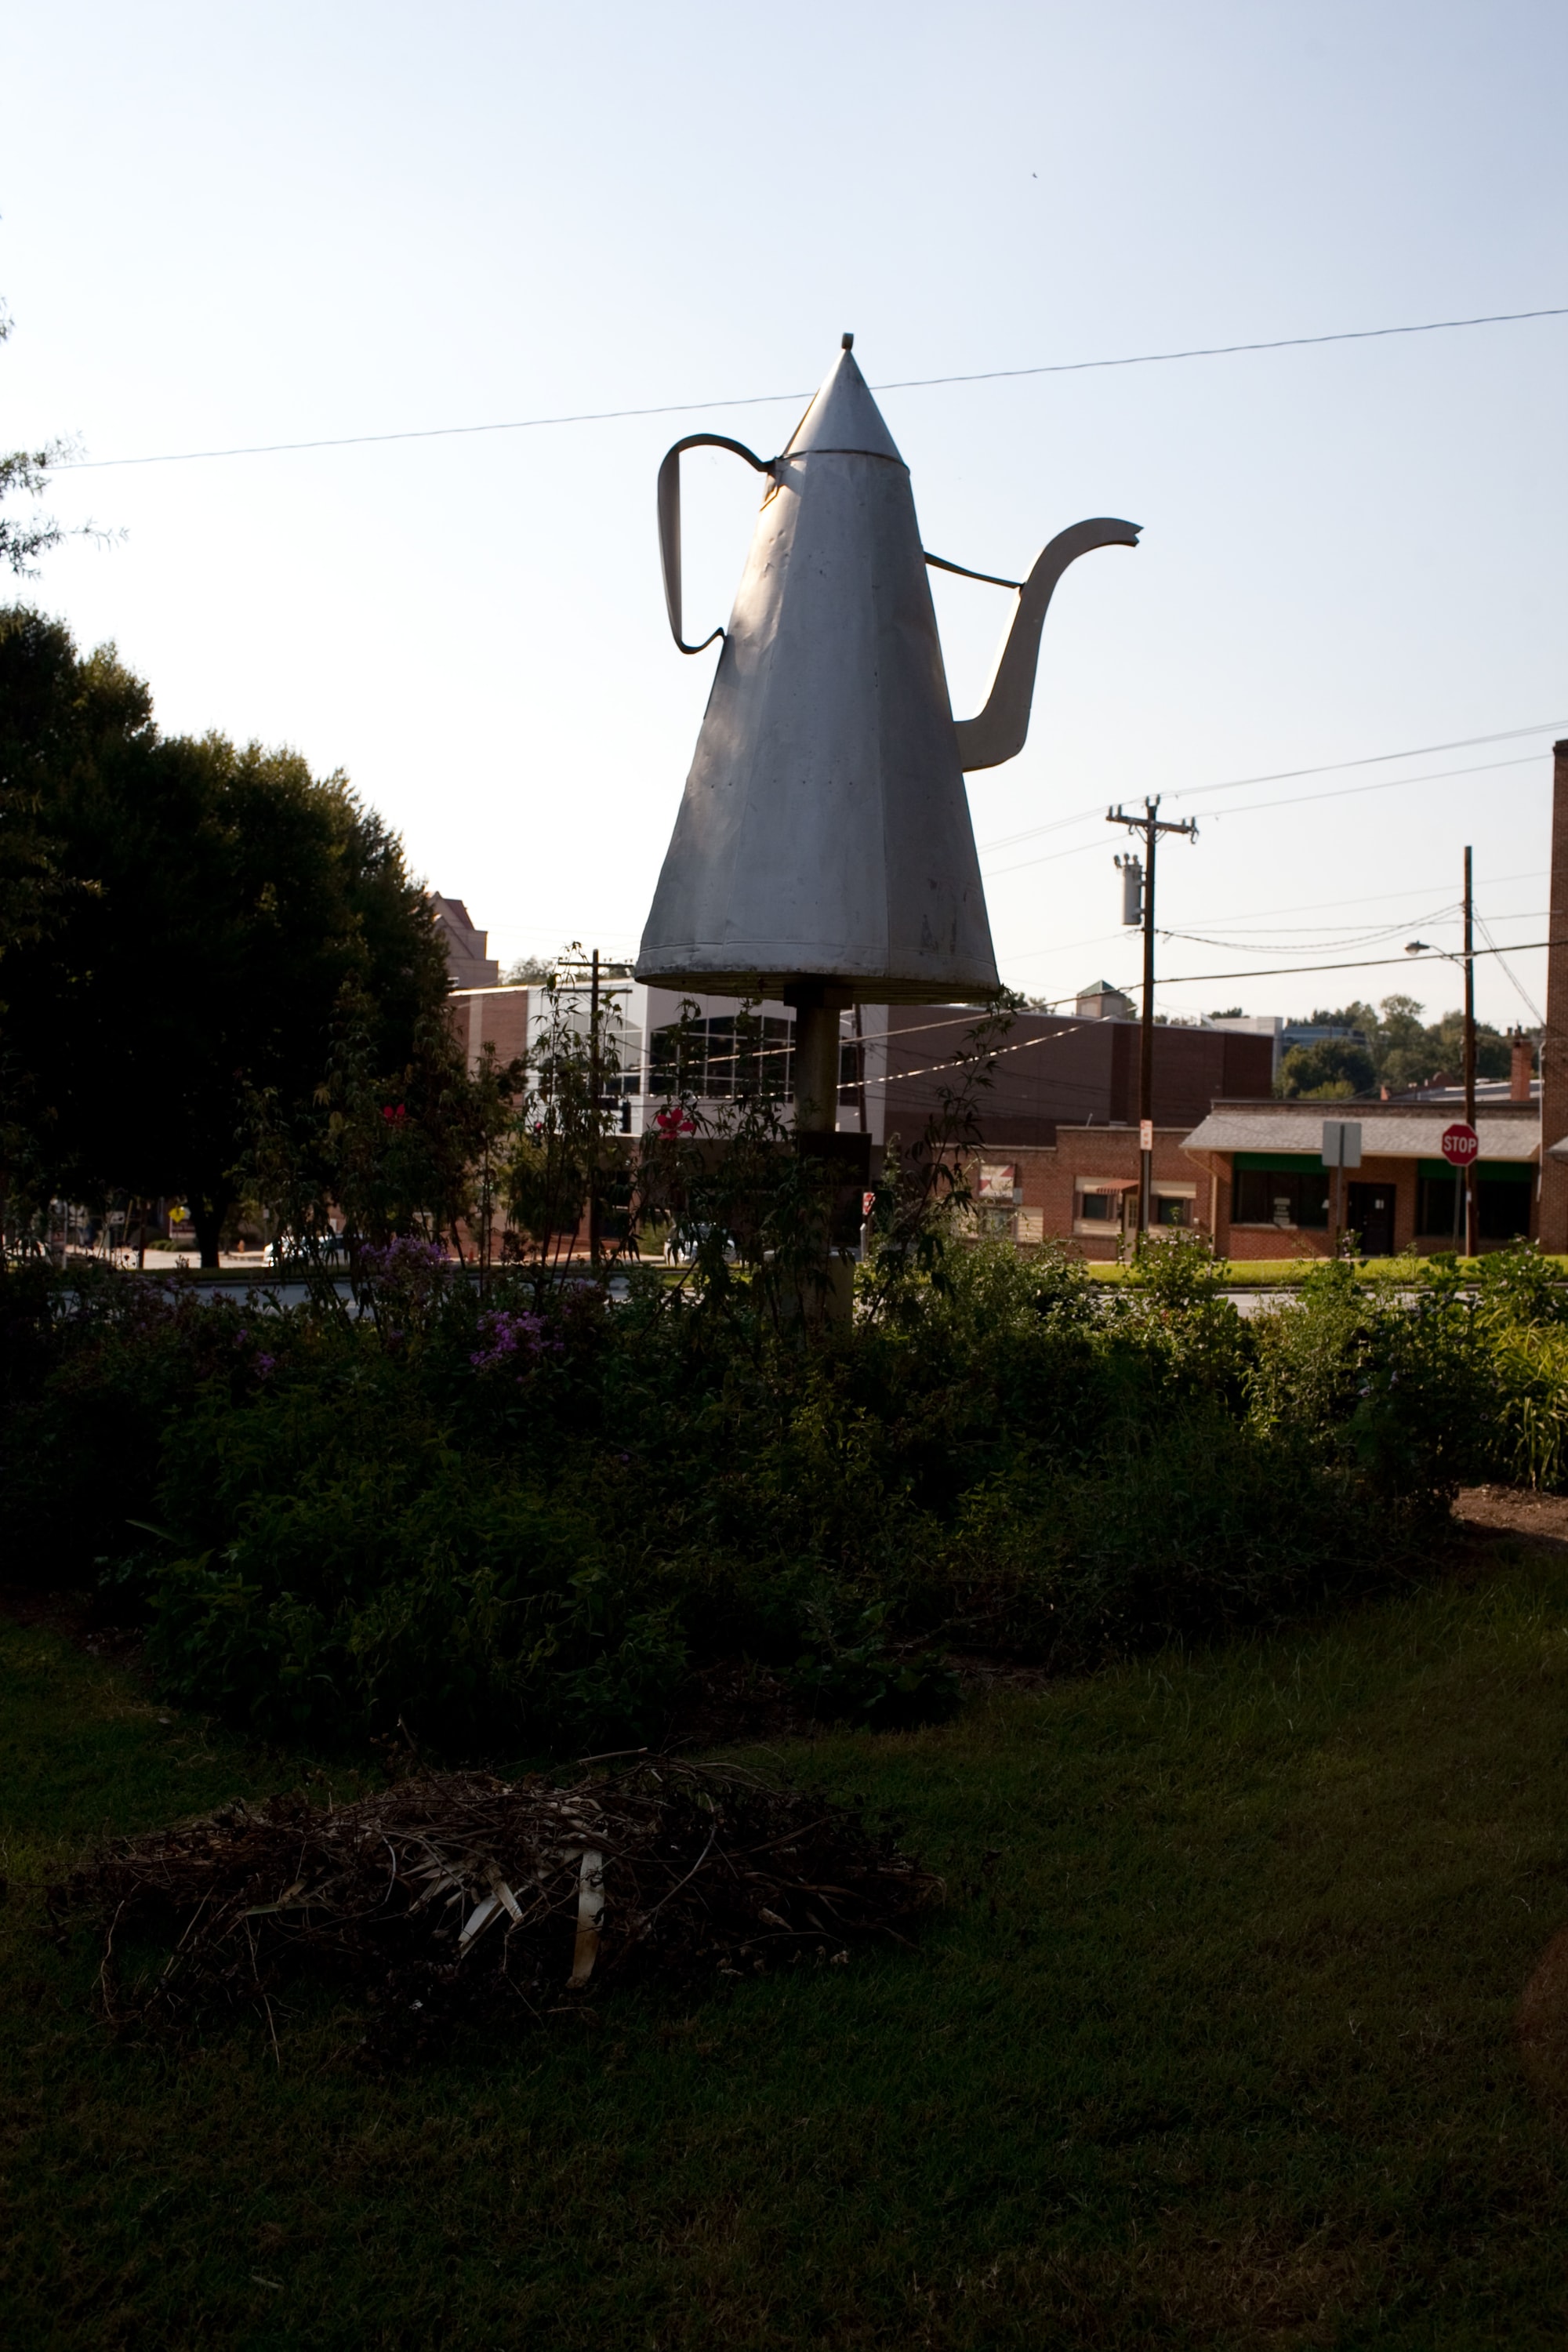 Big Coffee Pot in Winston-Salem, North Carolina